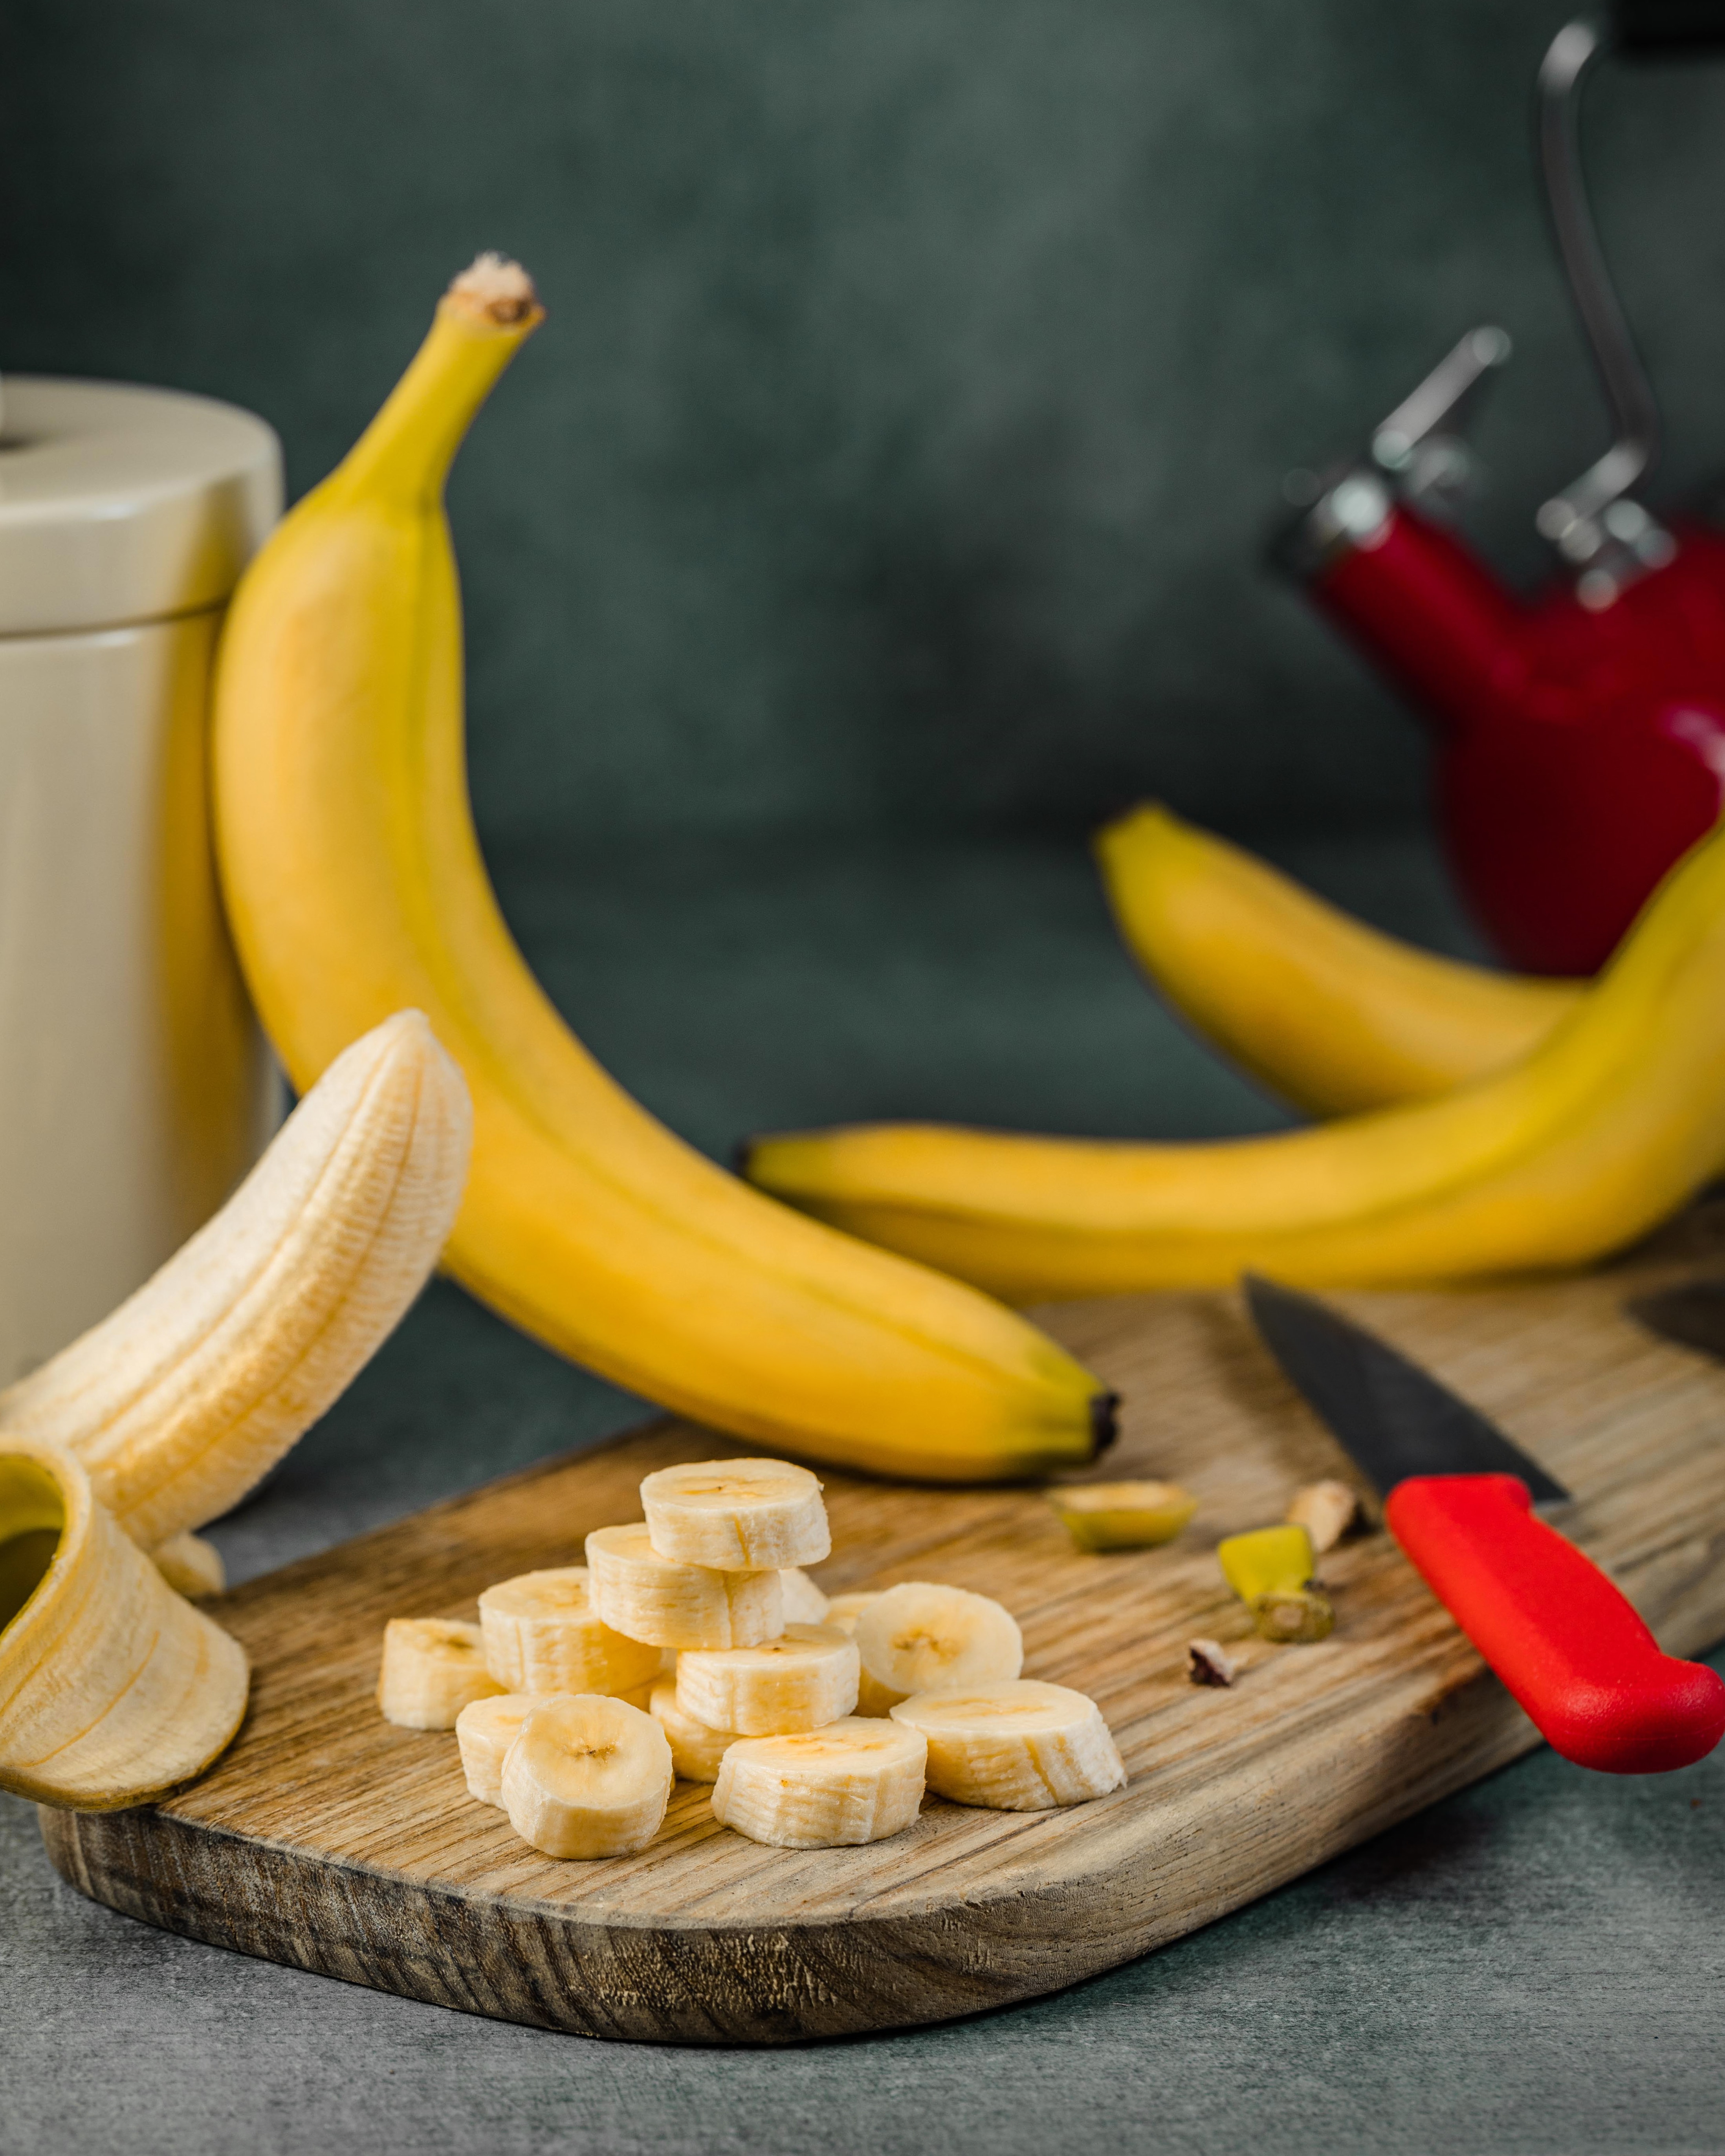 Comment conserver les bananes ? – Cuisine anti gaspi !